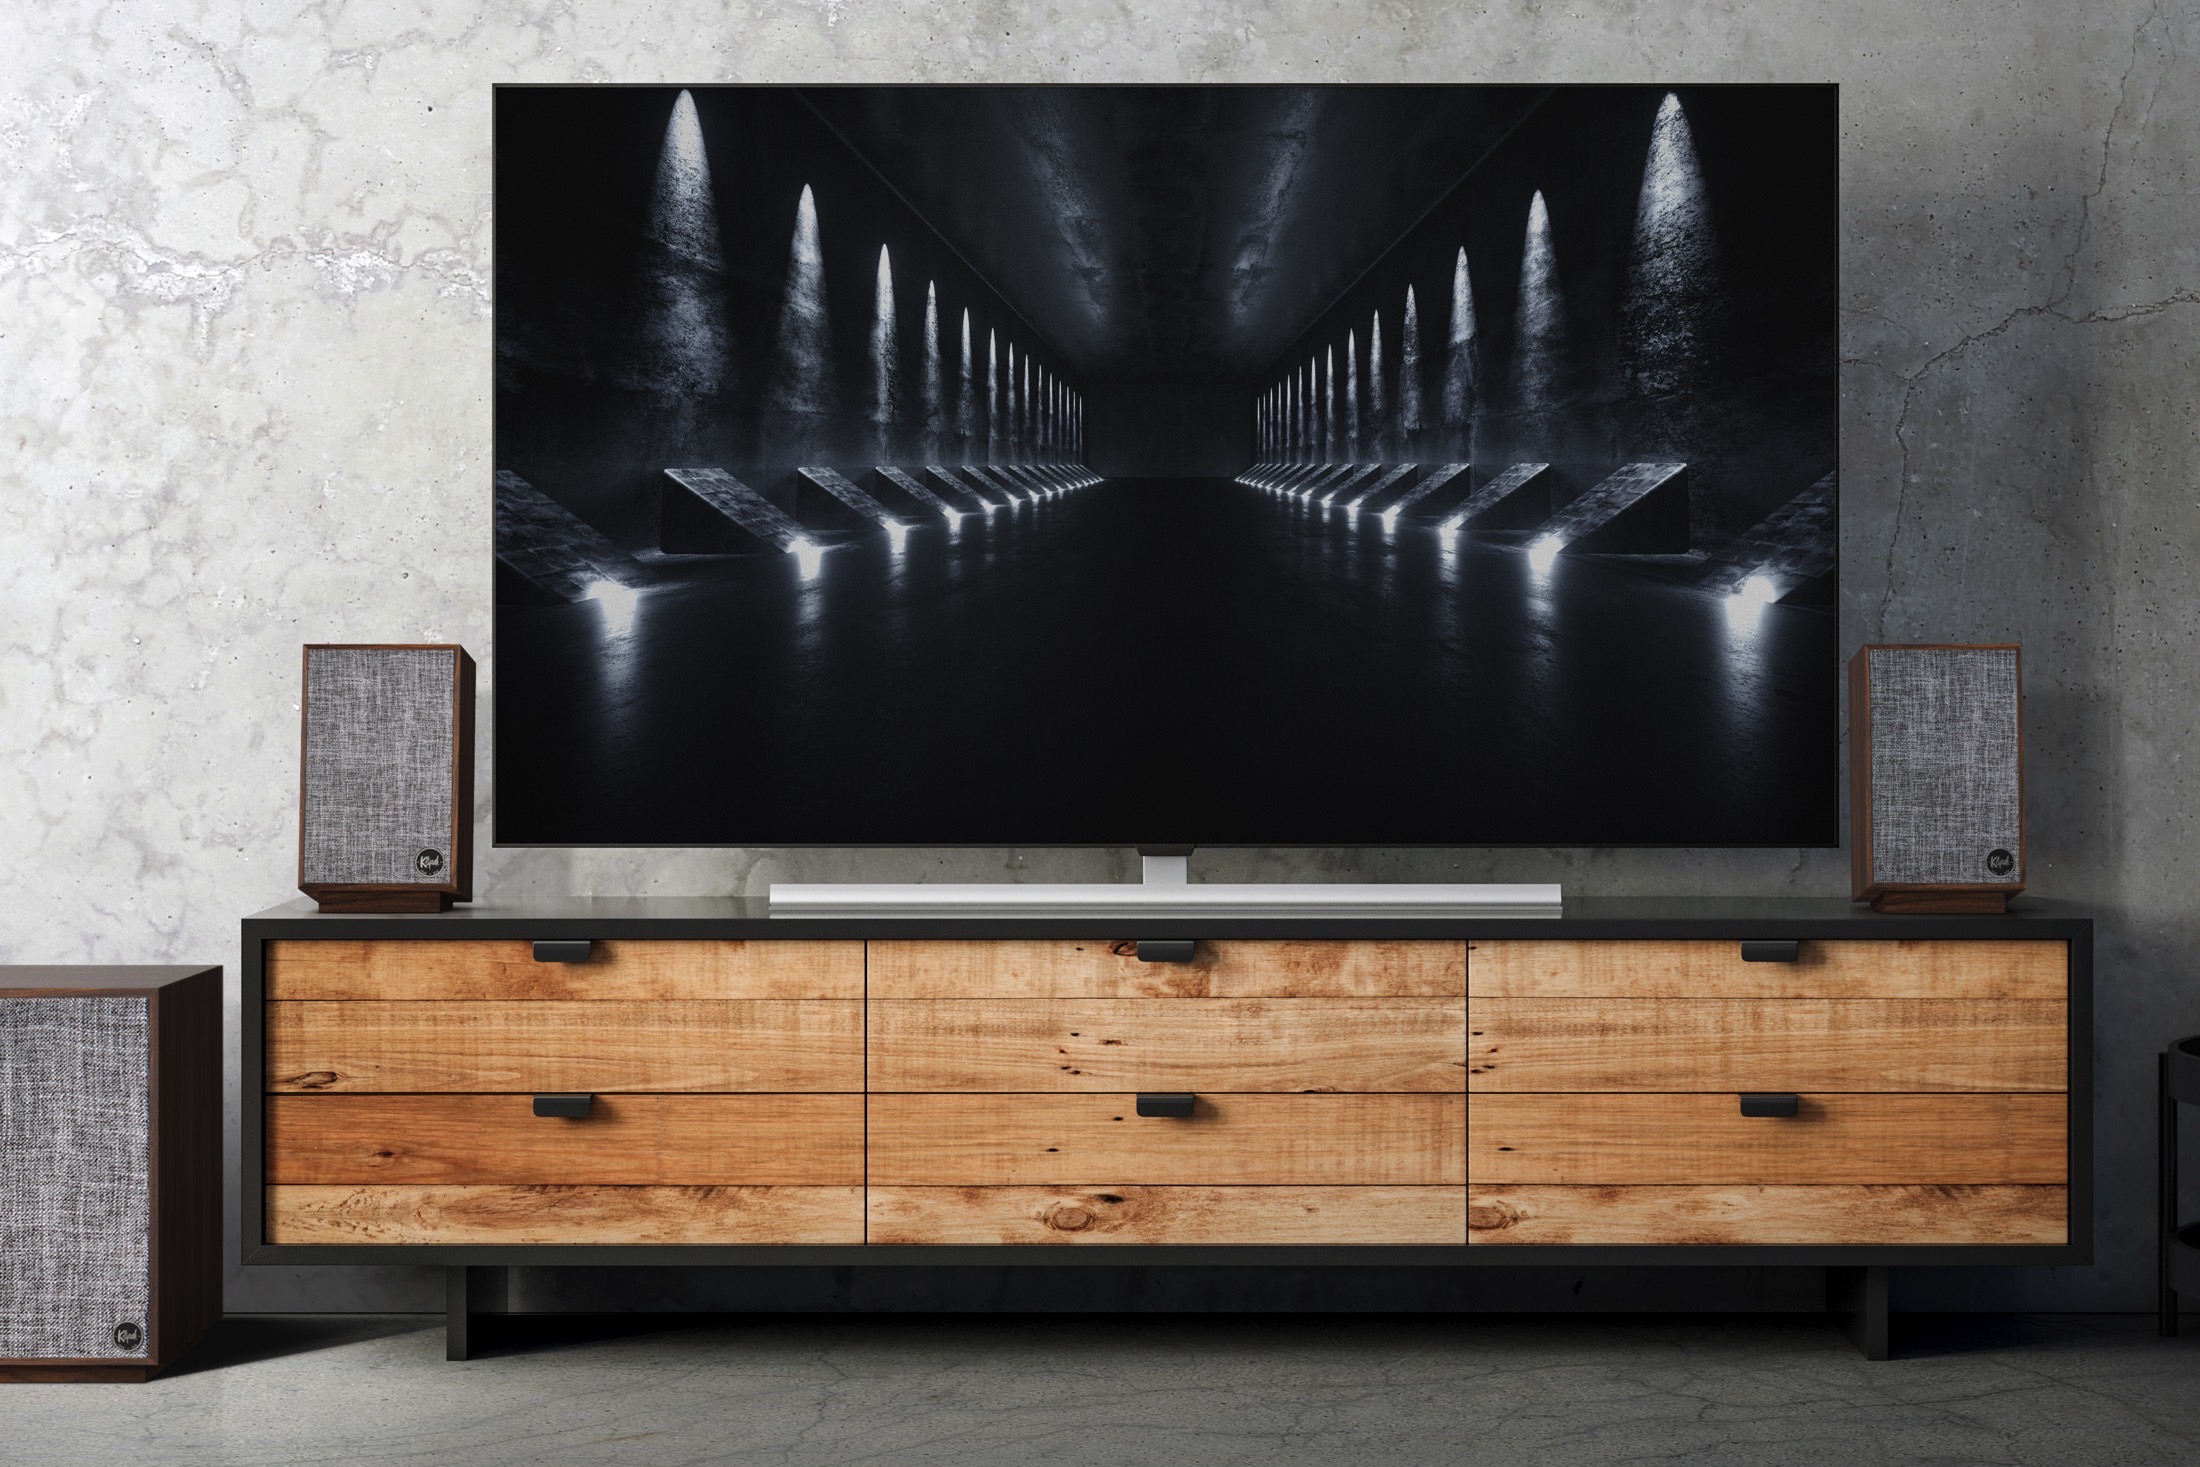 Klipsch ProMedia 2.1 speaker system seen next to a flat-screen TV.